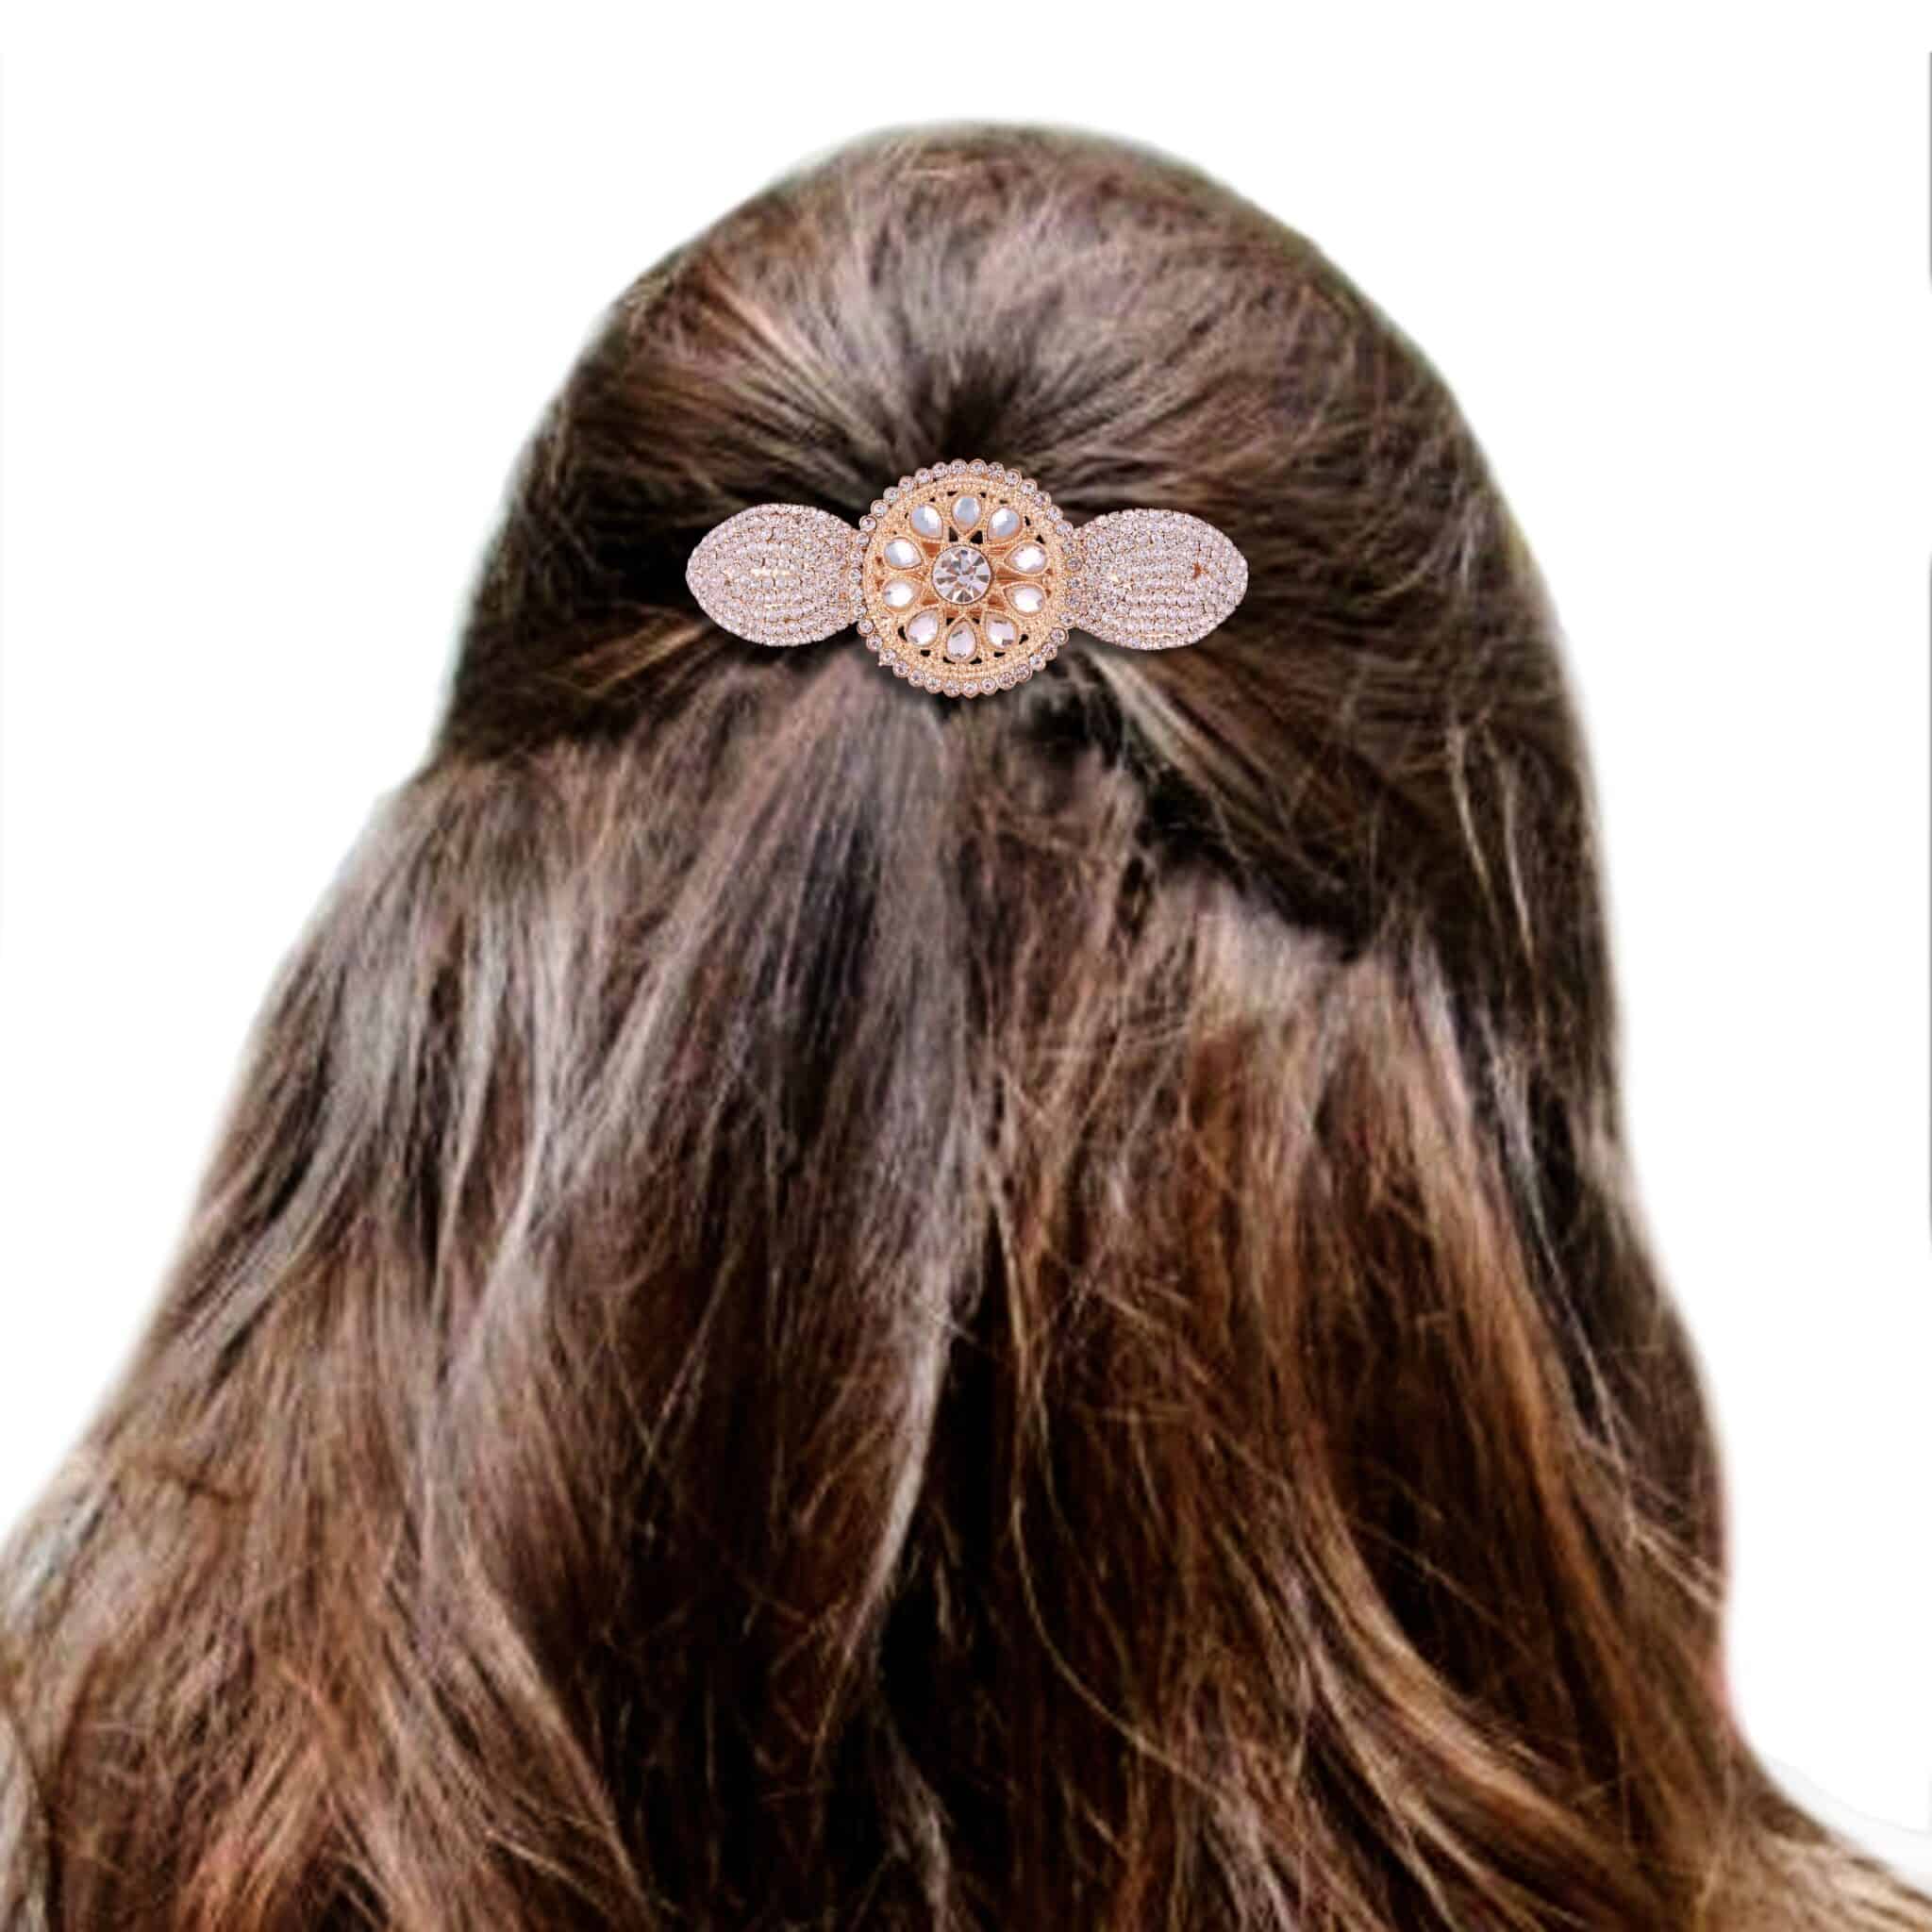 Accessher designer studded back Hair clip/ Hair Barrette/ Hair pin hair accessories for Women-HP0717GC6231GW - access-her